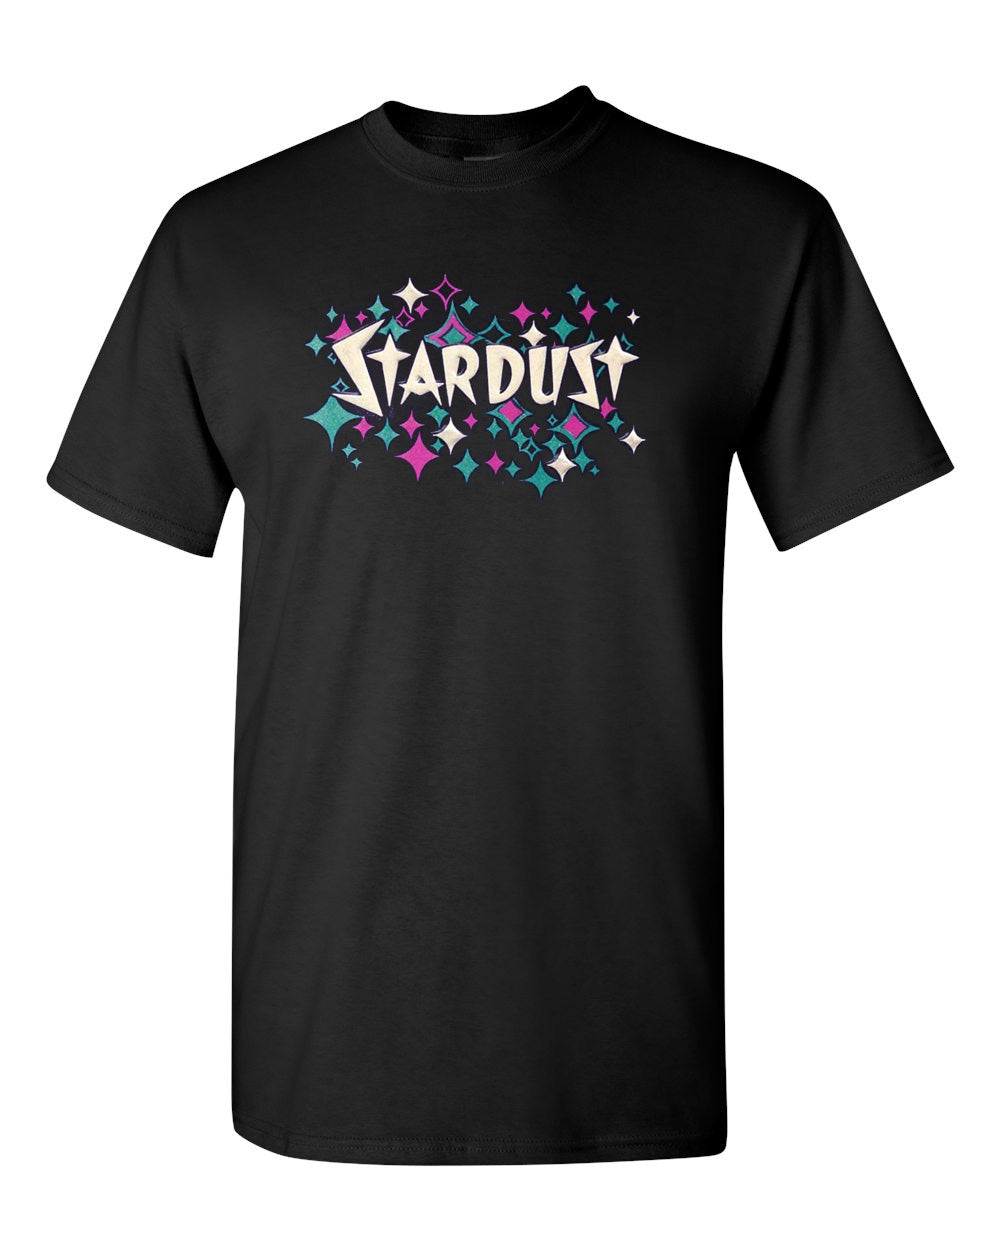 Stardust # 1 T-Shirt